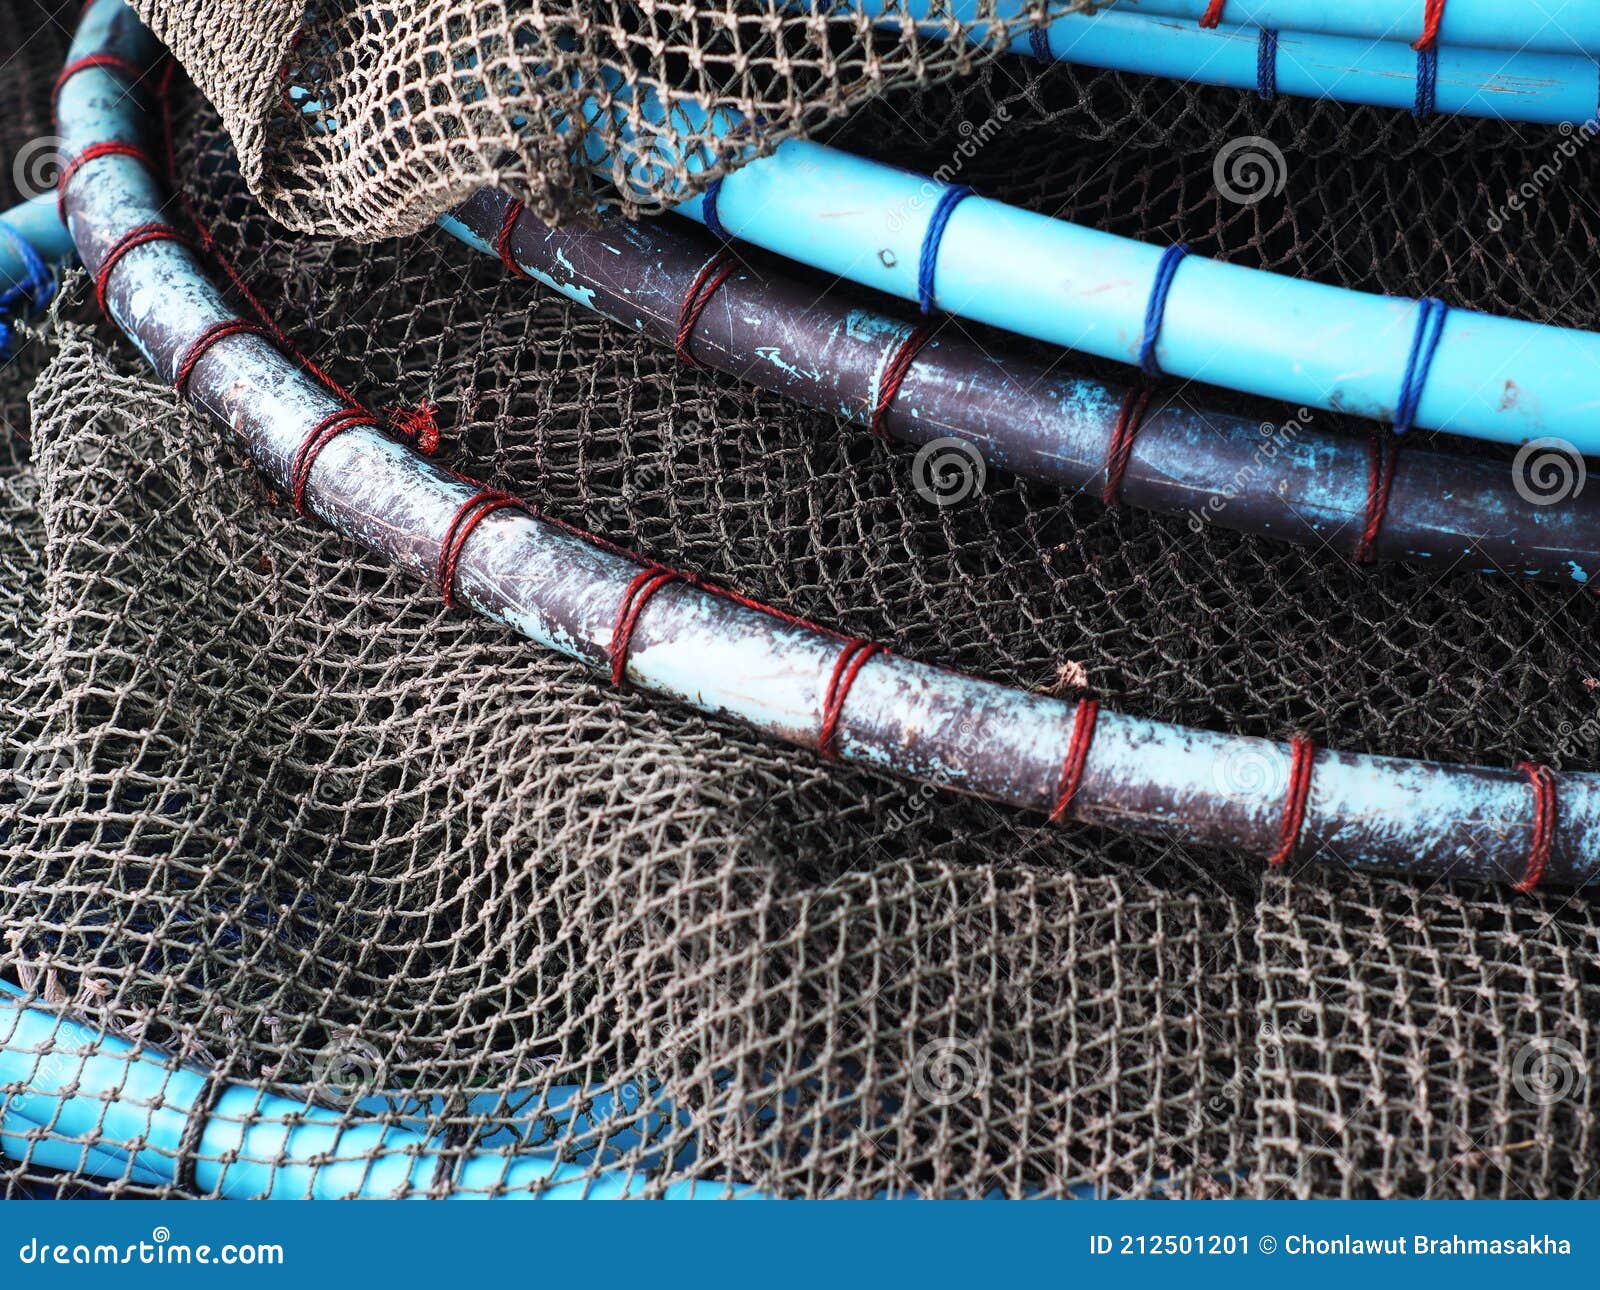 https://thumbs.dreamstime.com/z/fishing-fish-net-catcher-made-dark-blue-green-rope-blue-pvc-pipes-leaving-to-dry-use-shrimp-farm-thailand-212501201.jpg